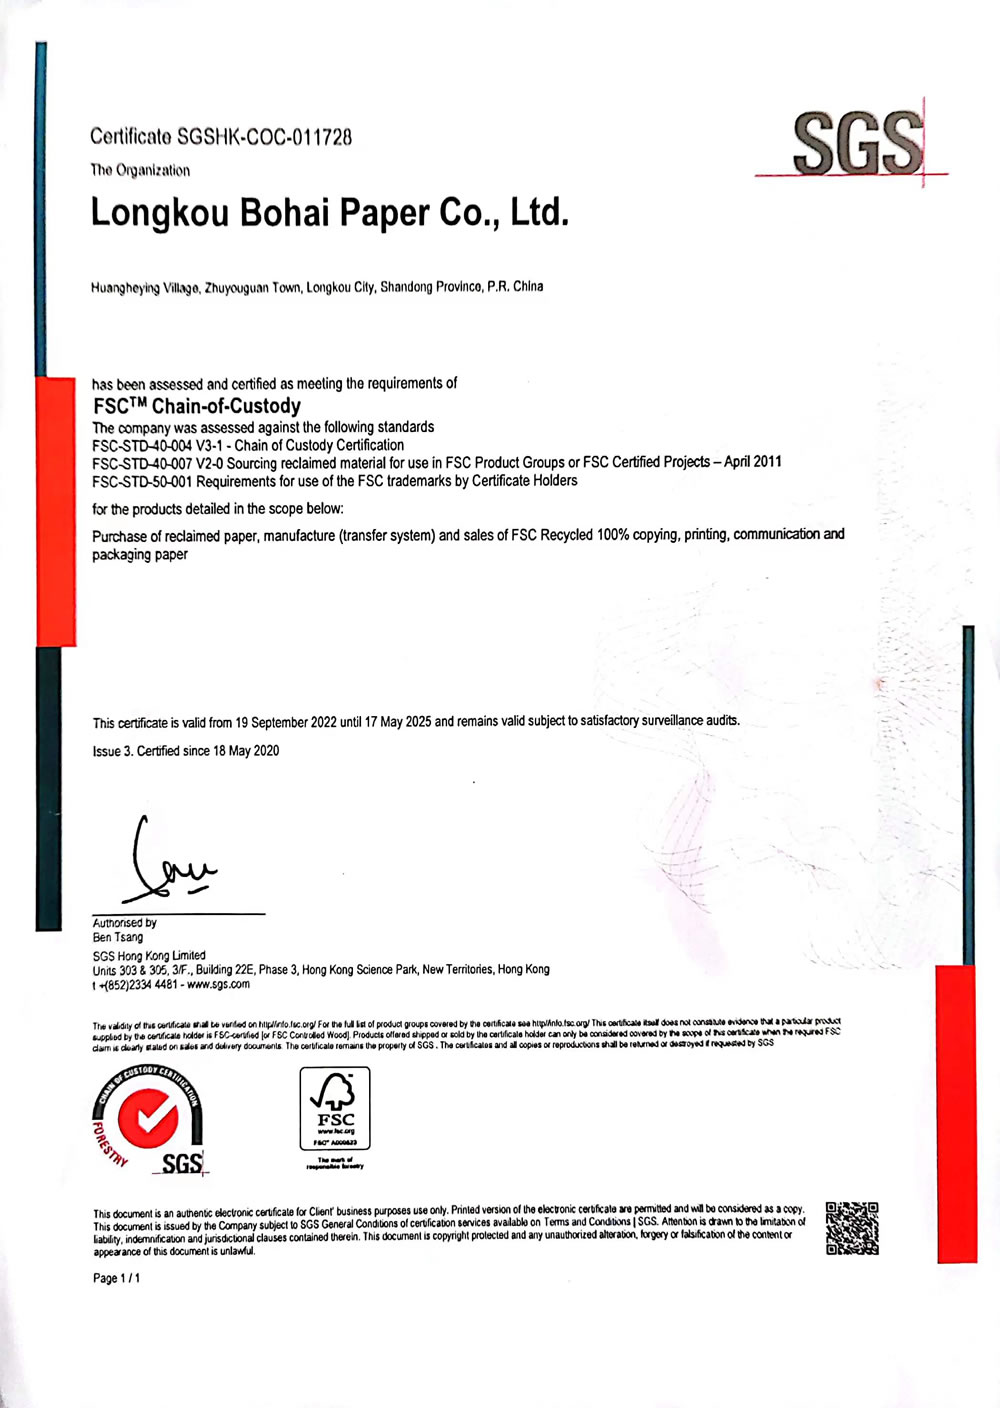 SGS certification certificate